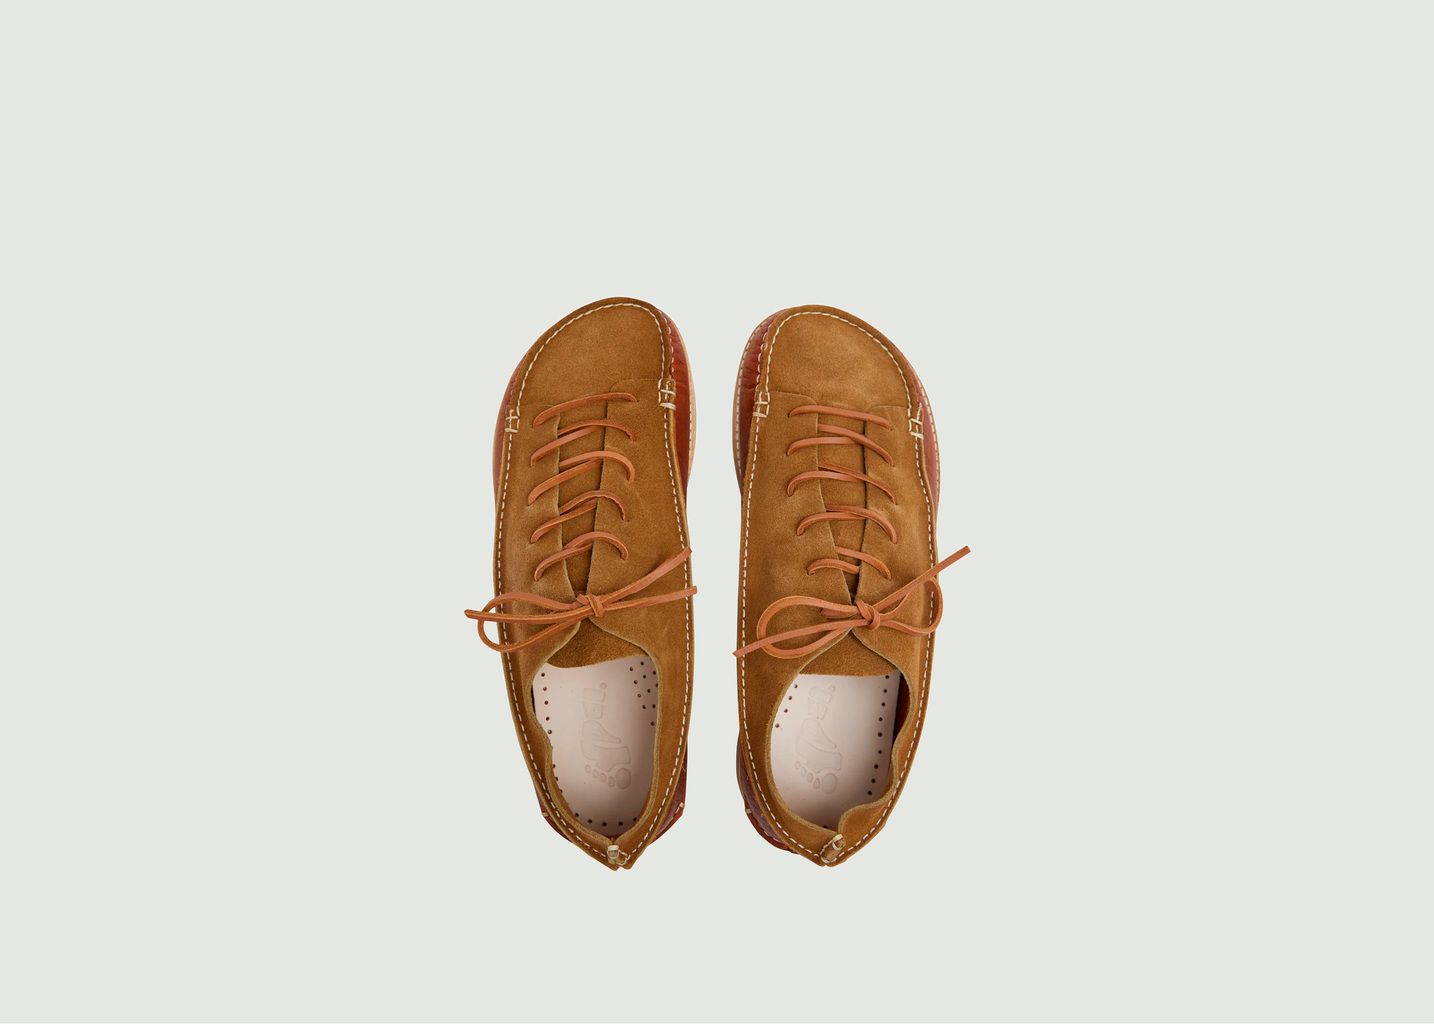 Schuhe von Finn Crepe - Yogi Footwear